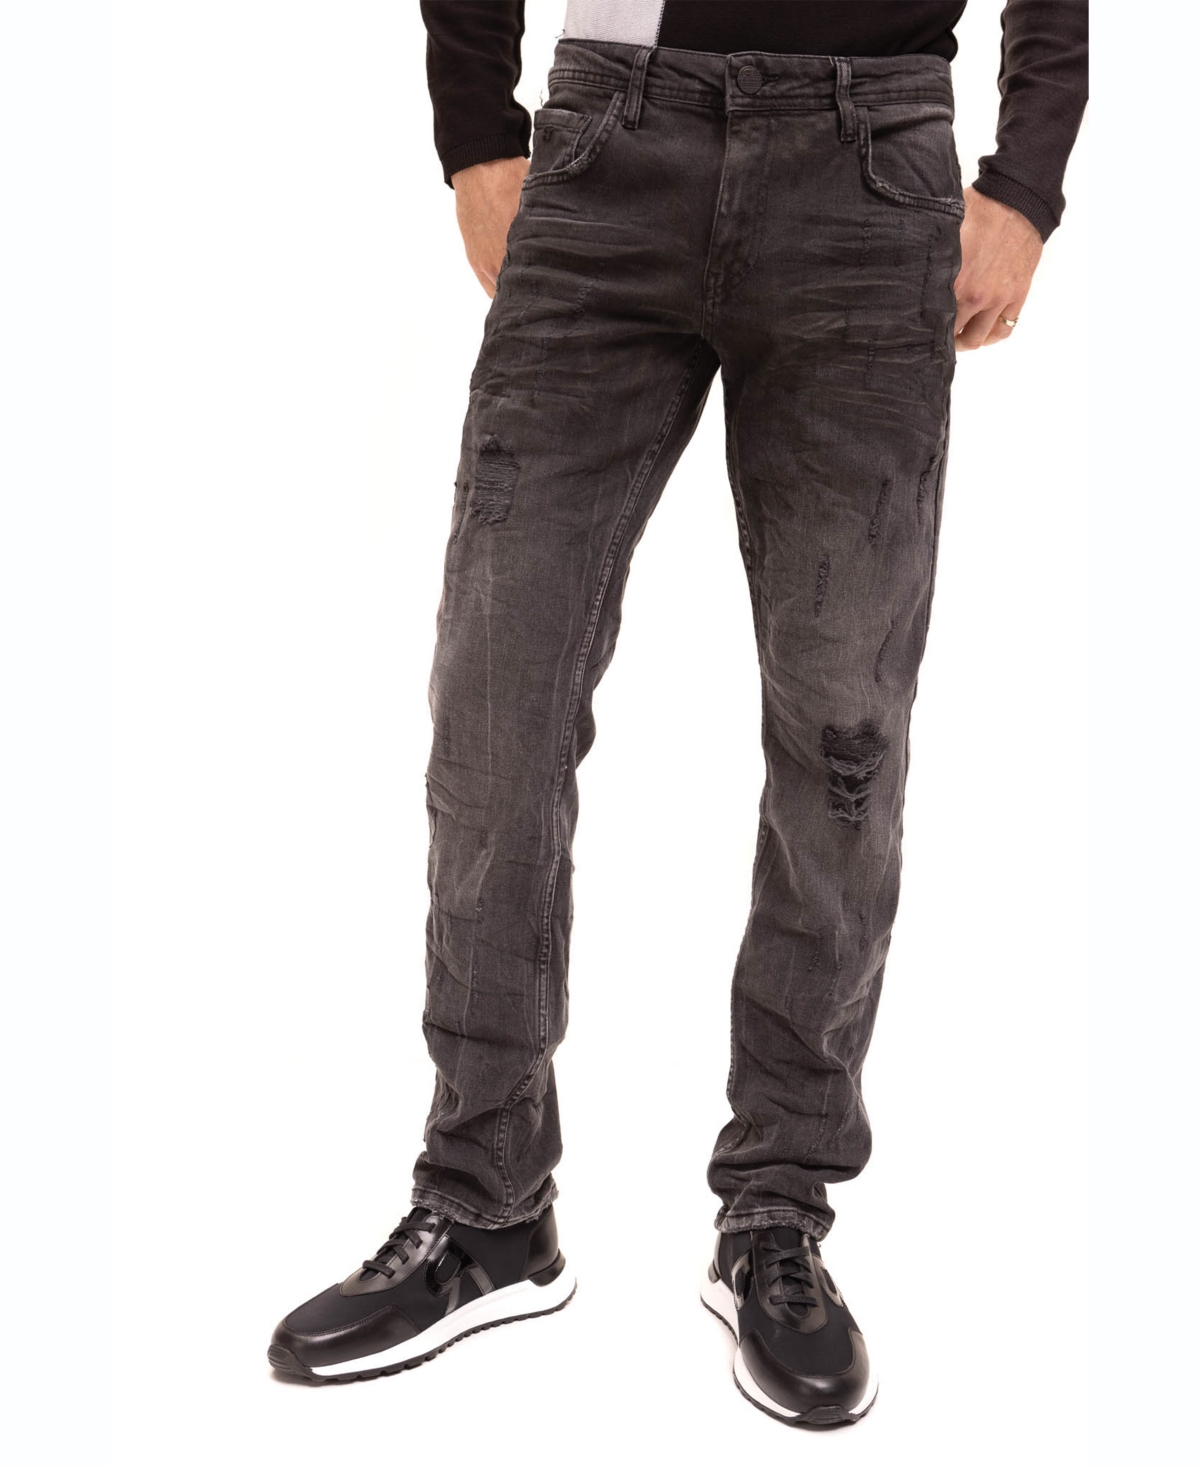 Men's Modern Classic Denim Jeans - Black